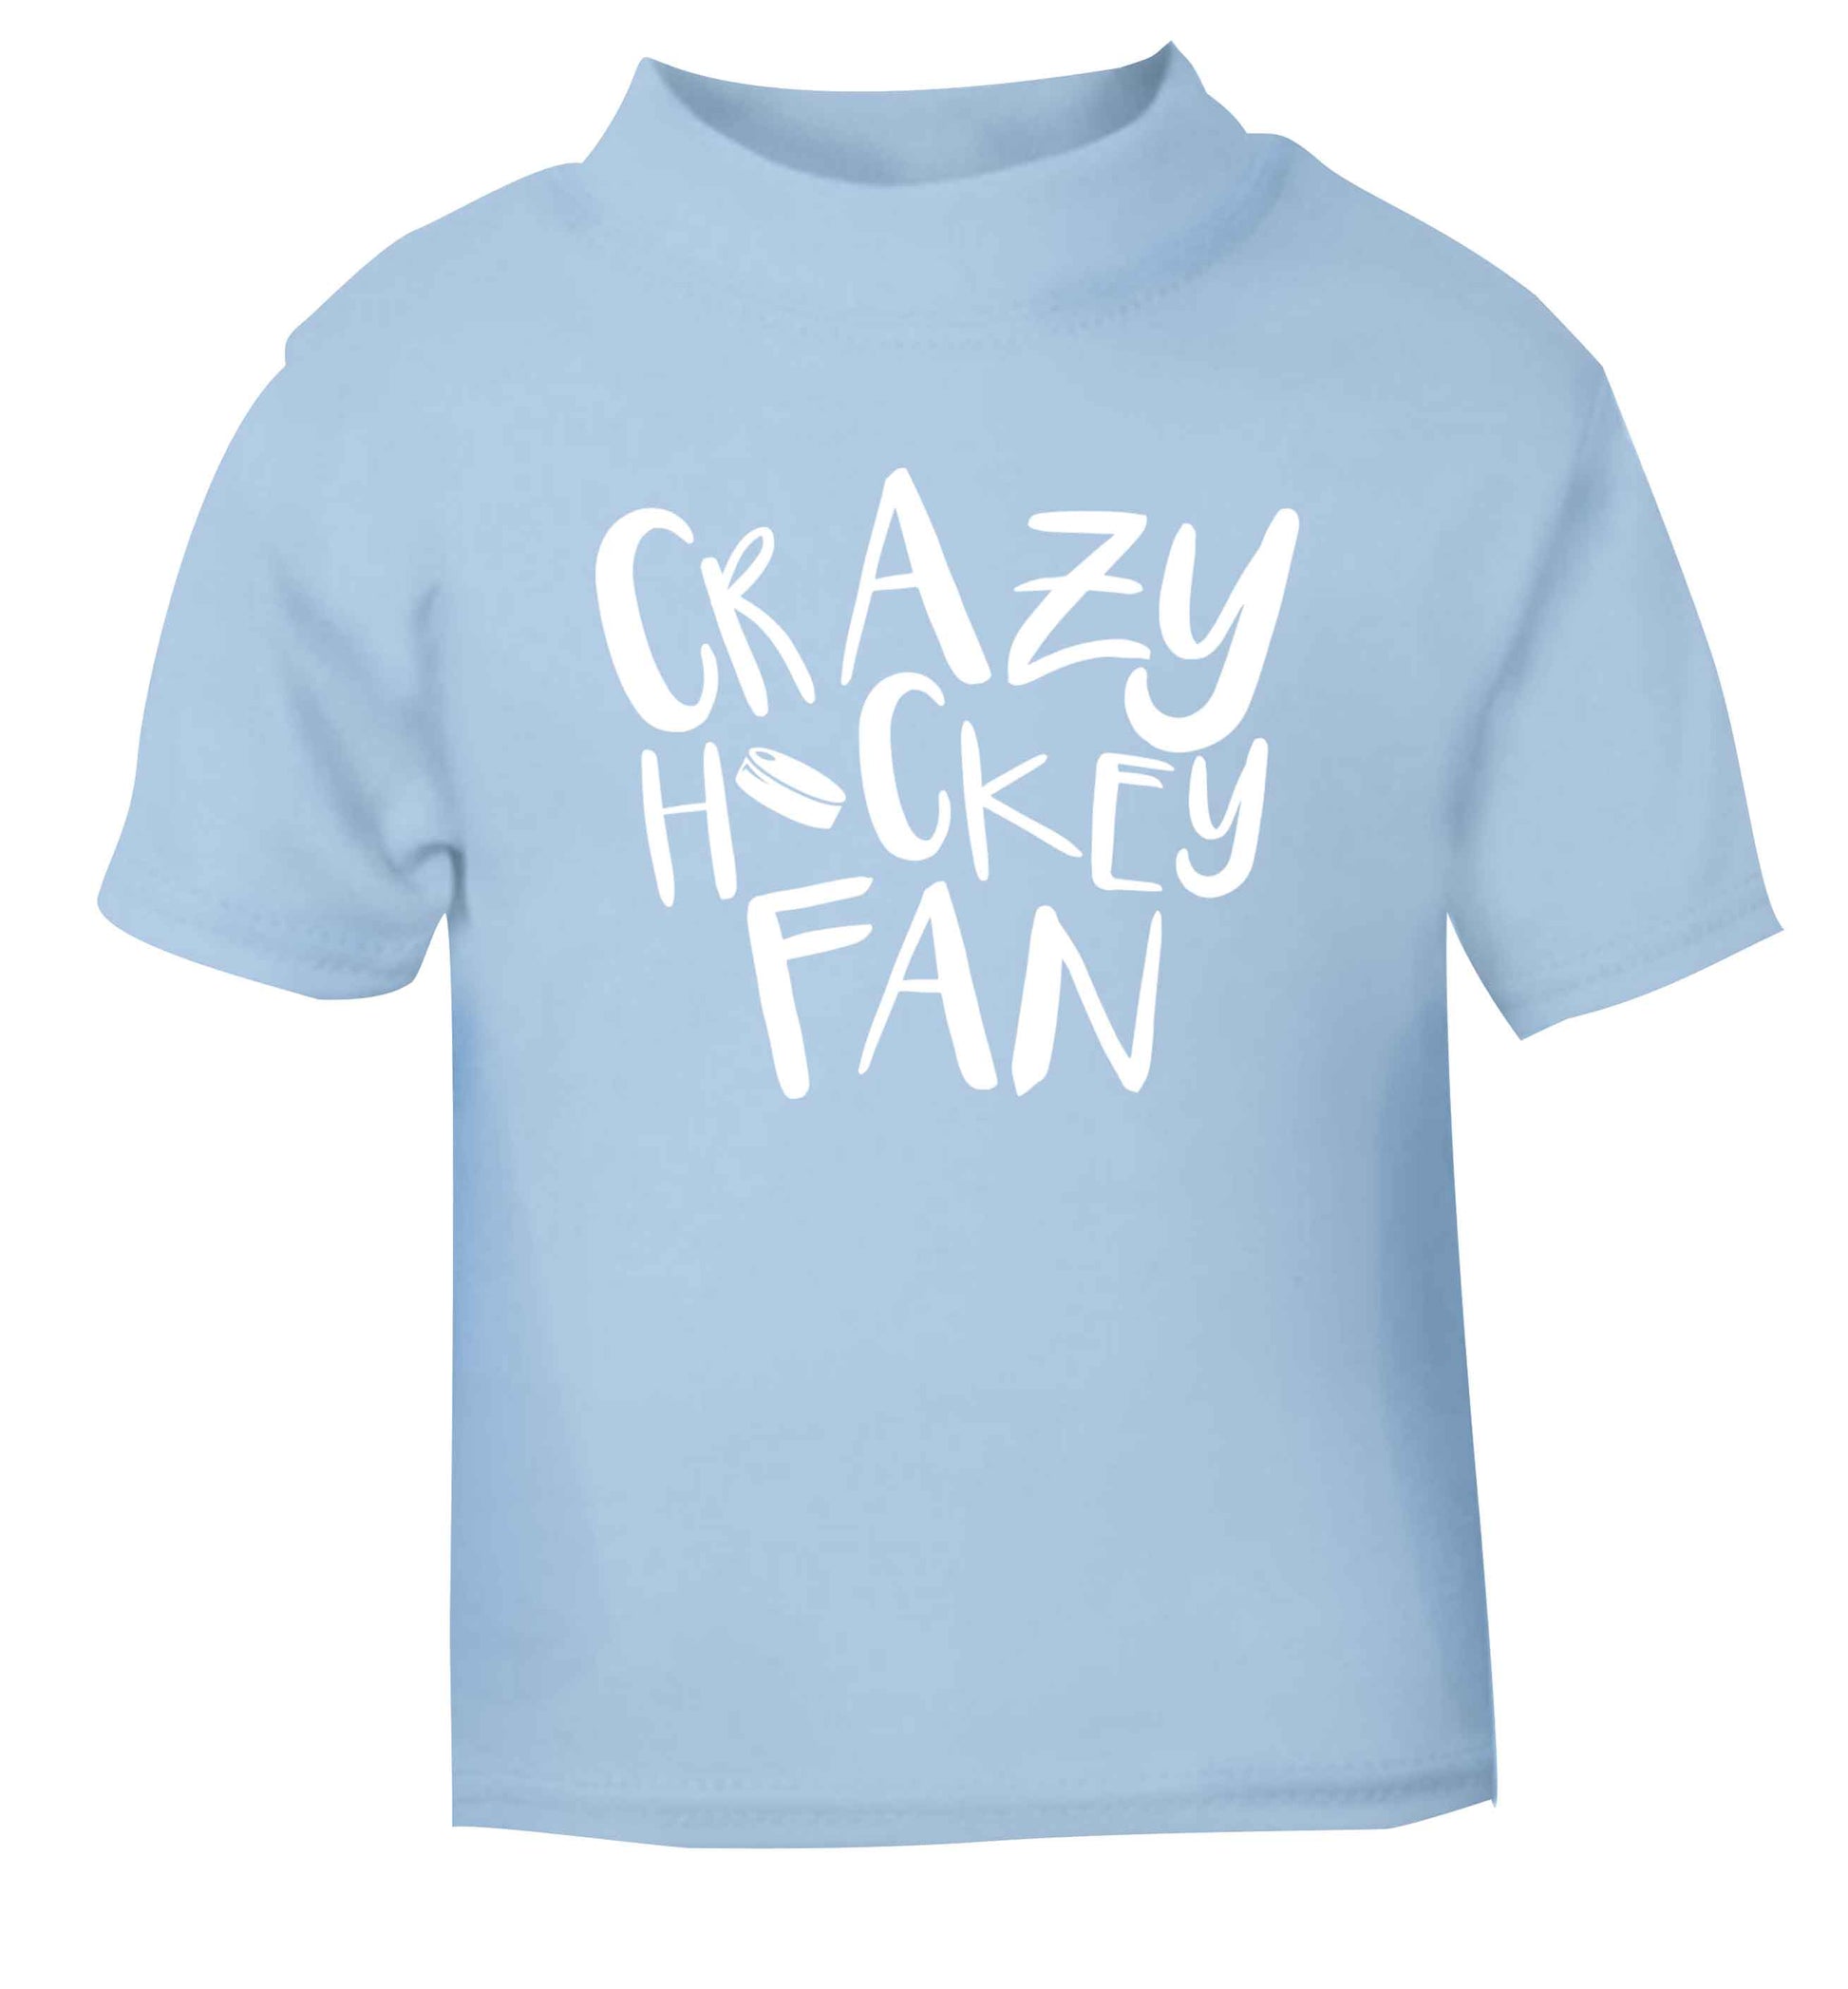 Crazy hockey fan light blue Baby Toddler Tshirt 2 Years